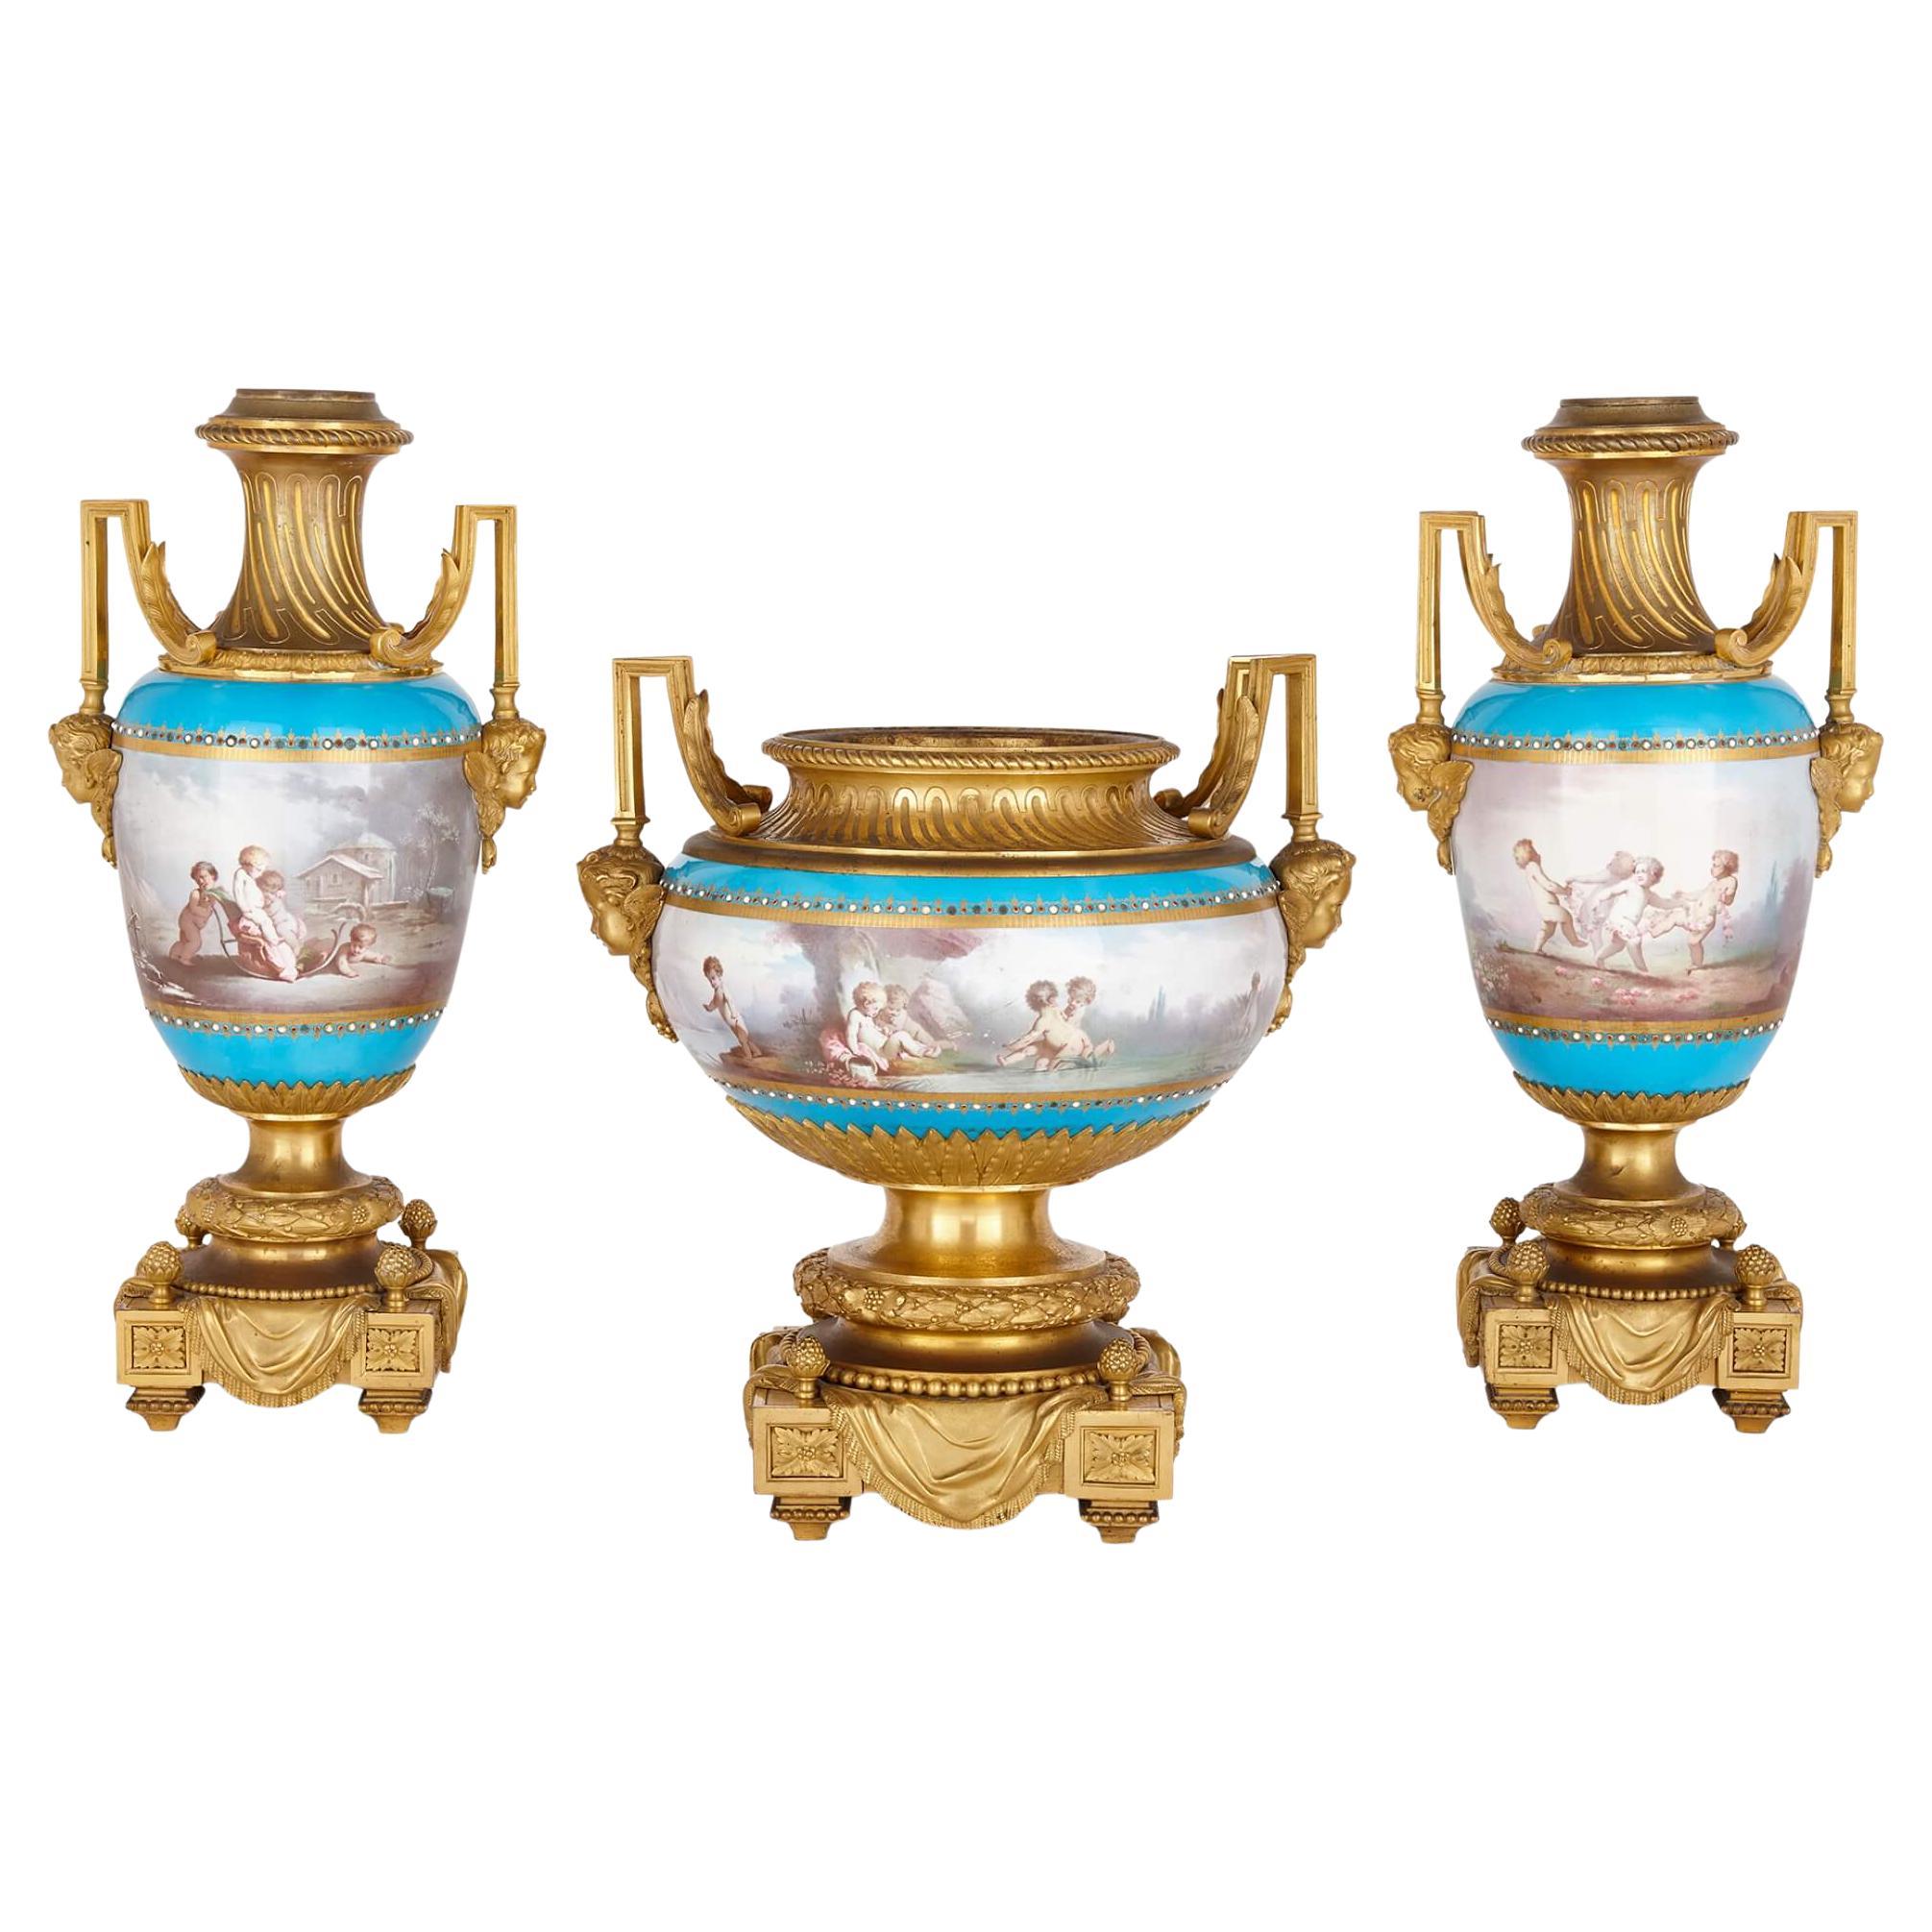 Ormolu and Sèvres-style porcelain three-piece garniture suite